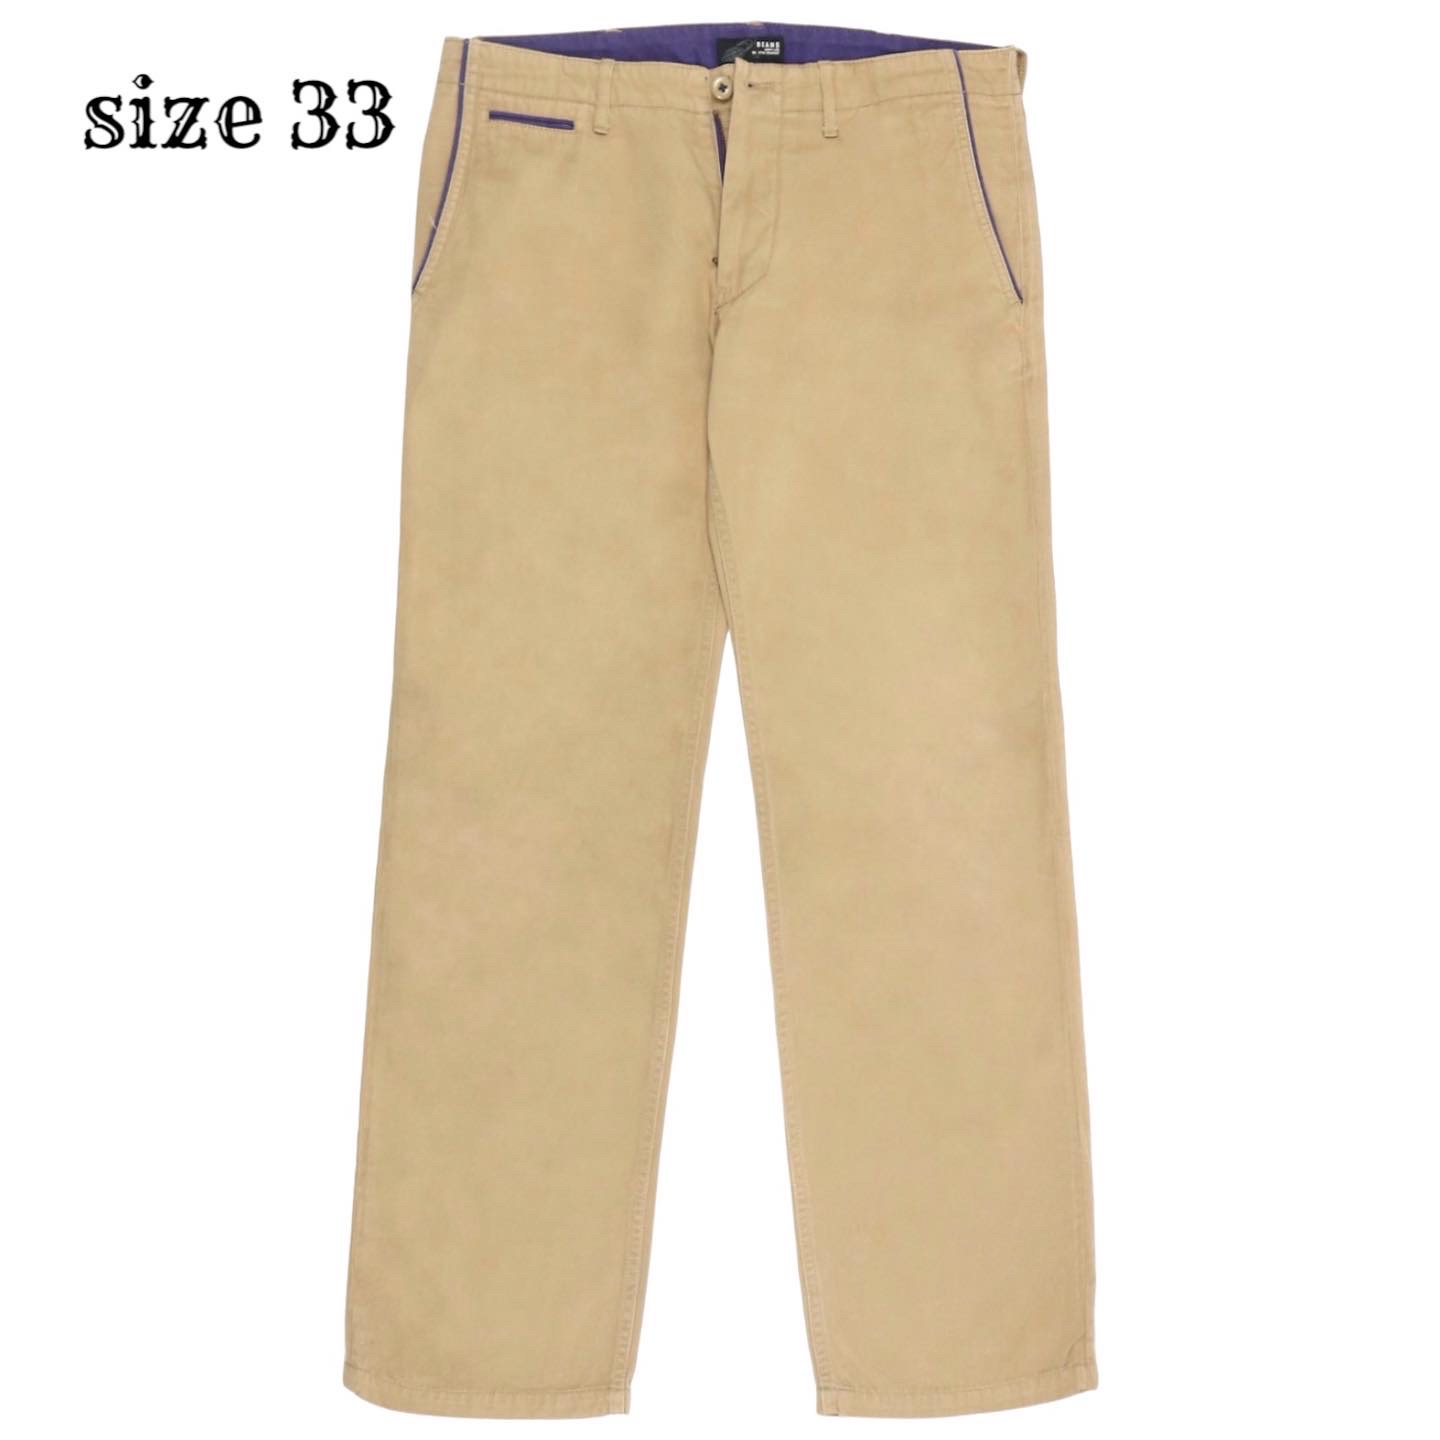 Beams Khaki Pants Size 33